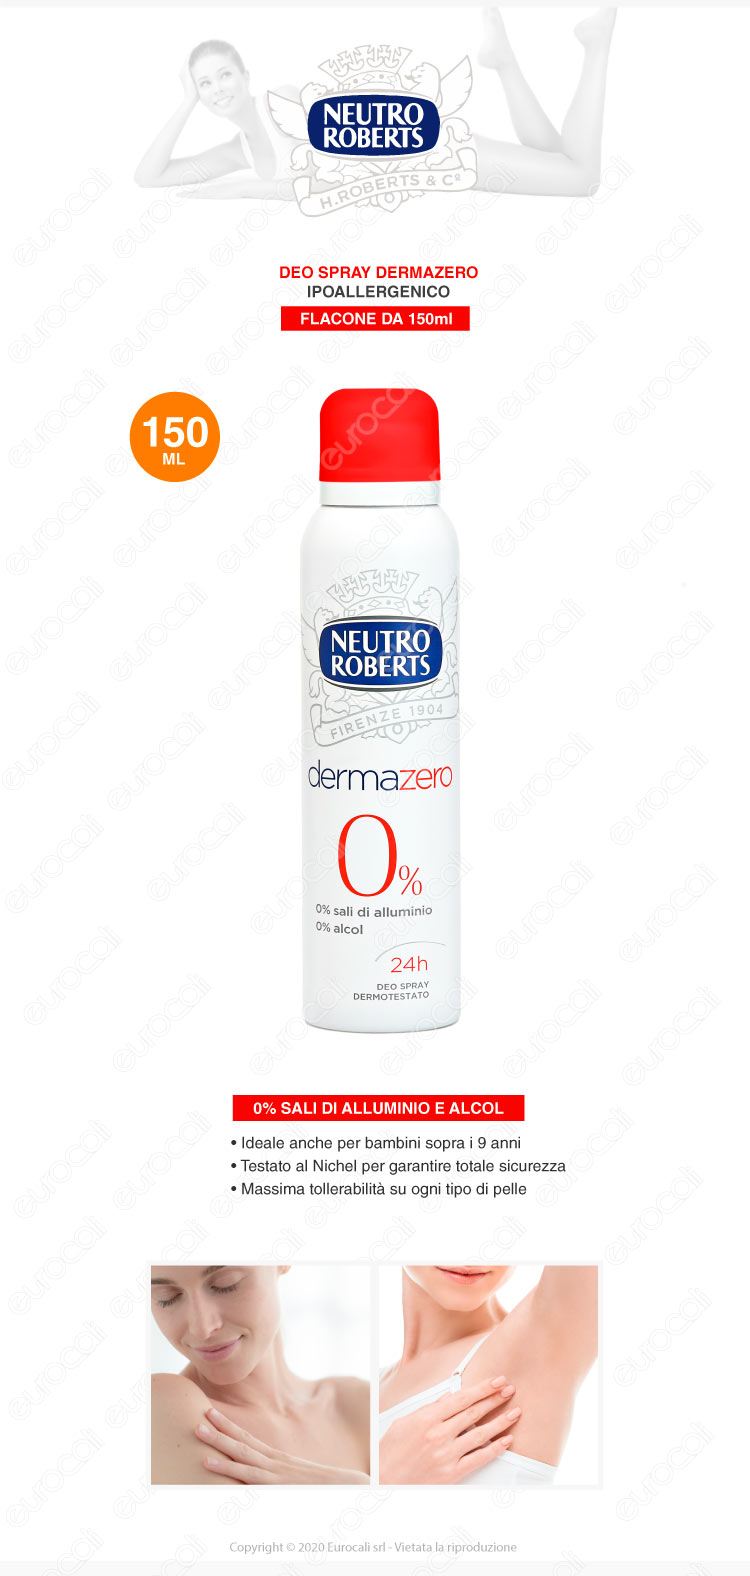 neutro roberts deo spray 24h dermazero ipoallergenico 150ml